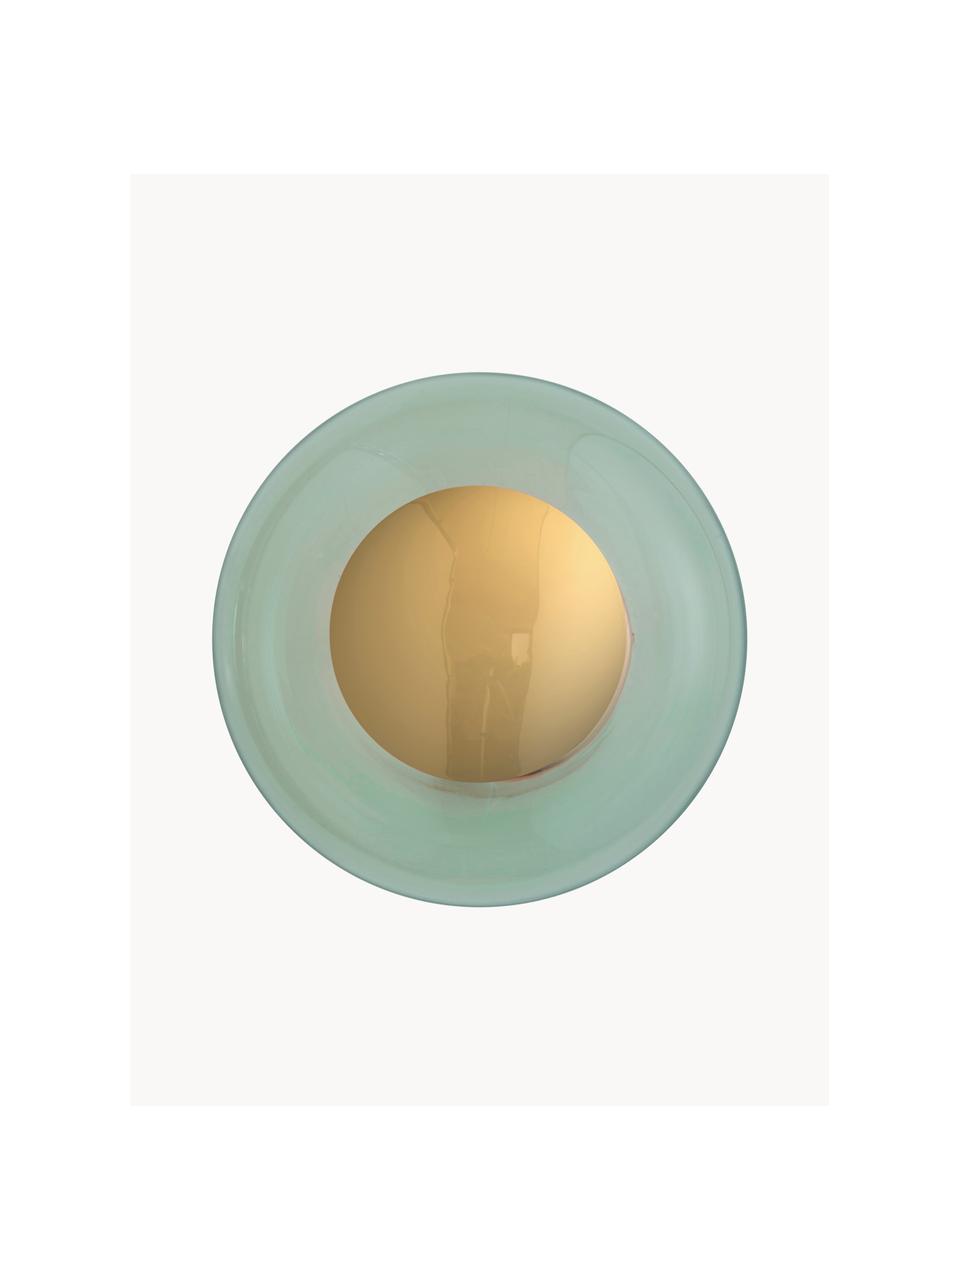 Mondgeblazen wandlamp Horizon, Lampenkap: mondgeblazen glas, Mintgroen, goudkleurig, Ø 21 x D 17 cm